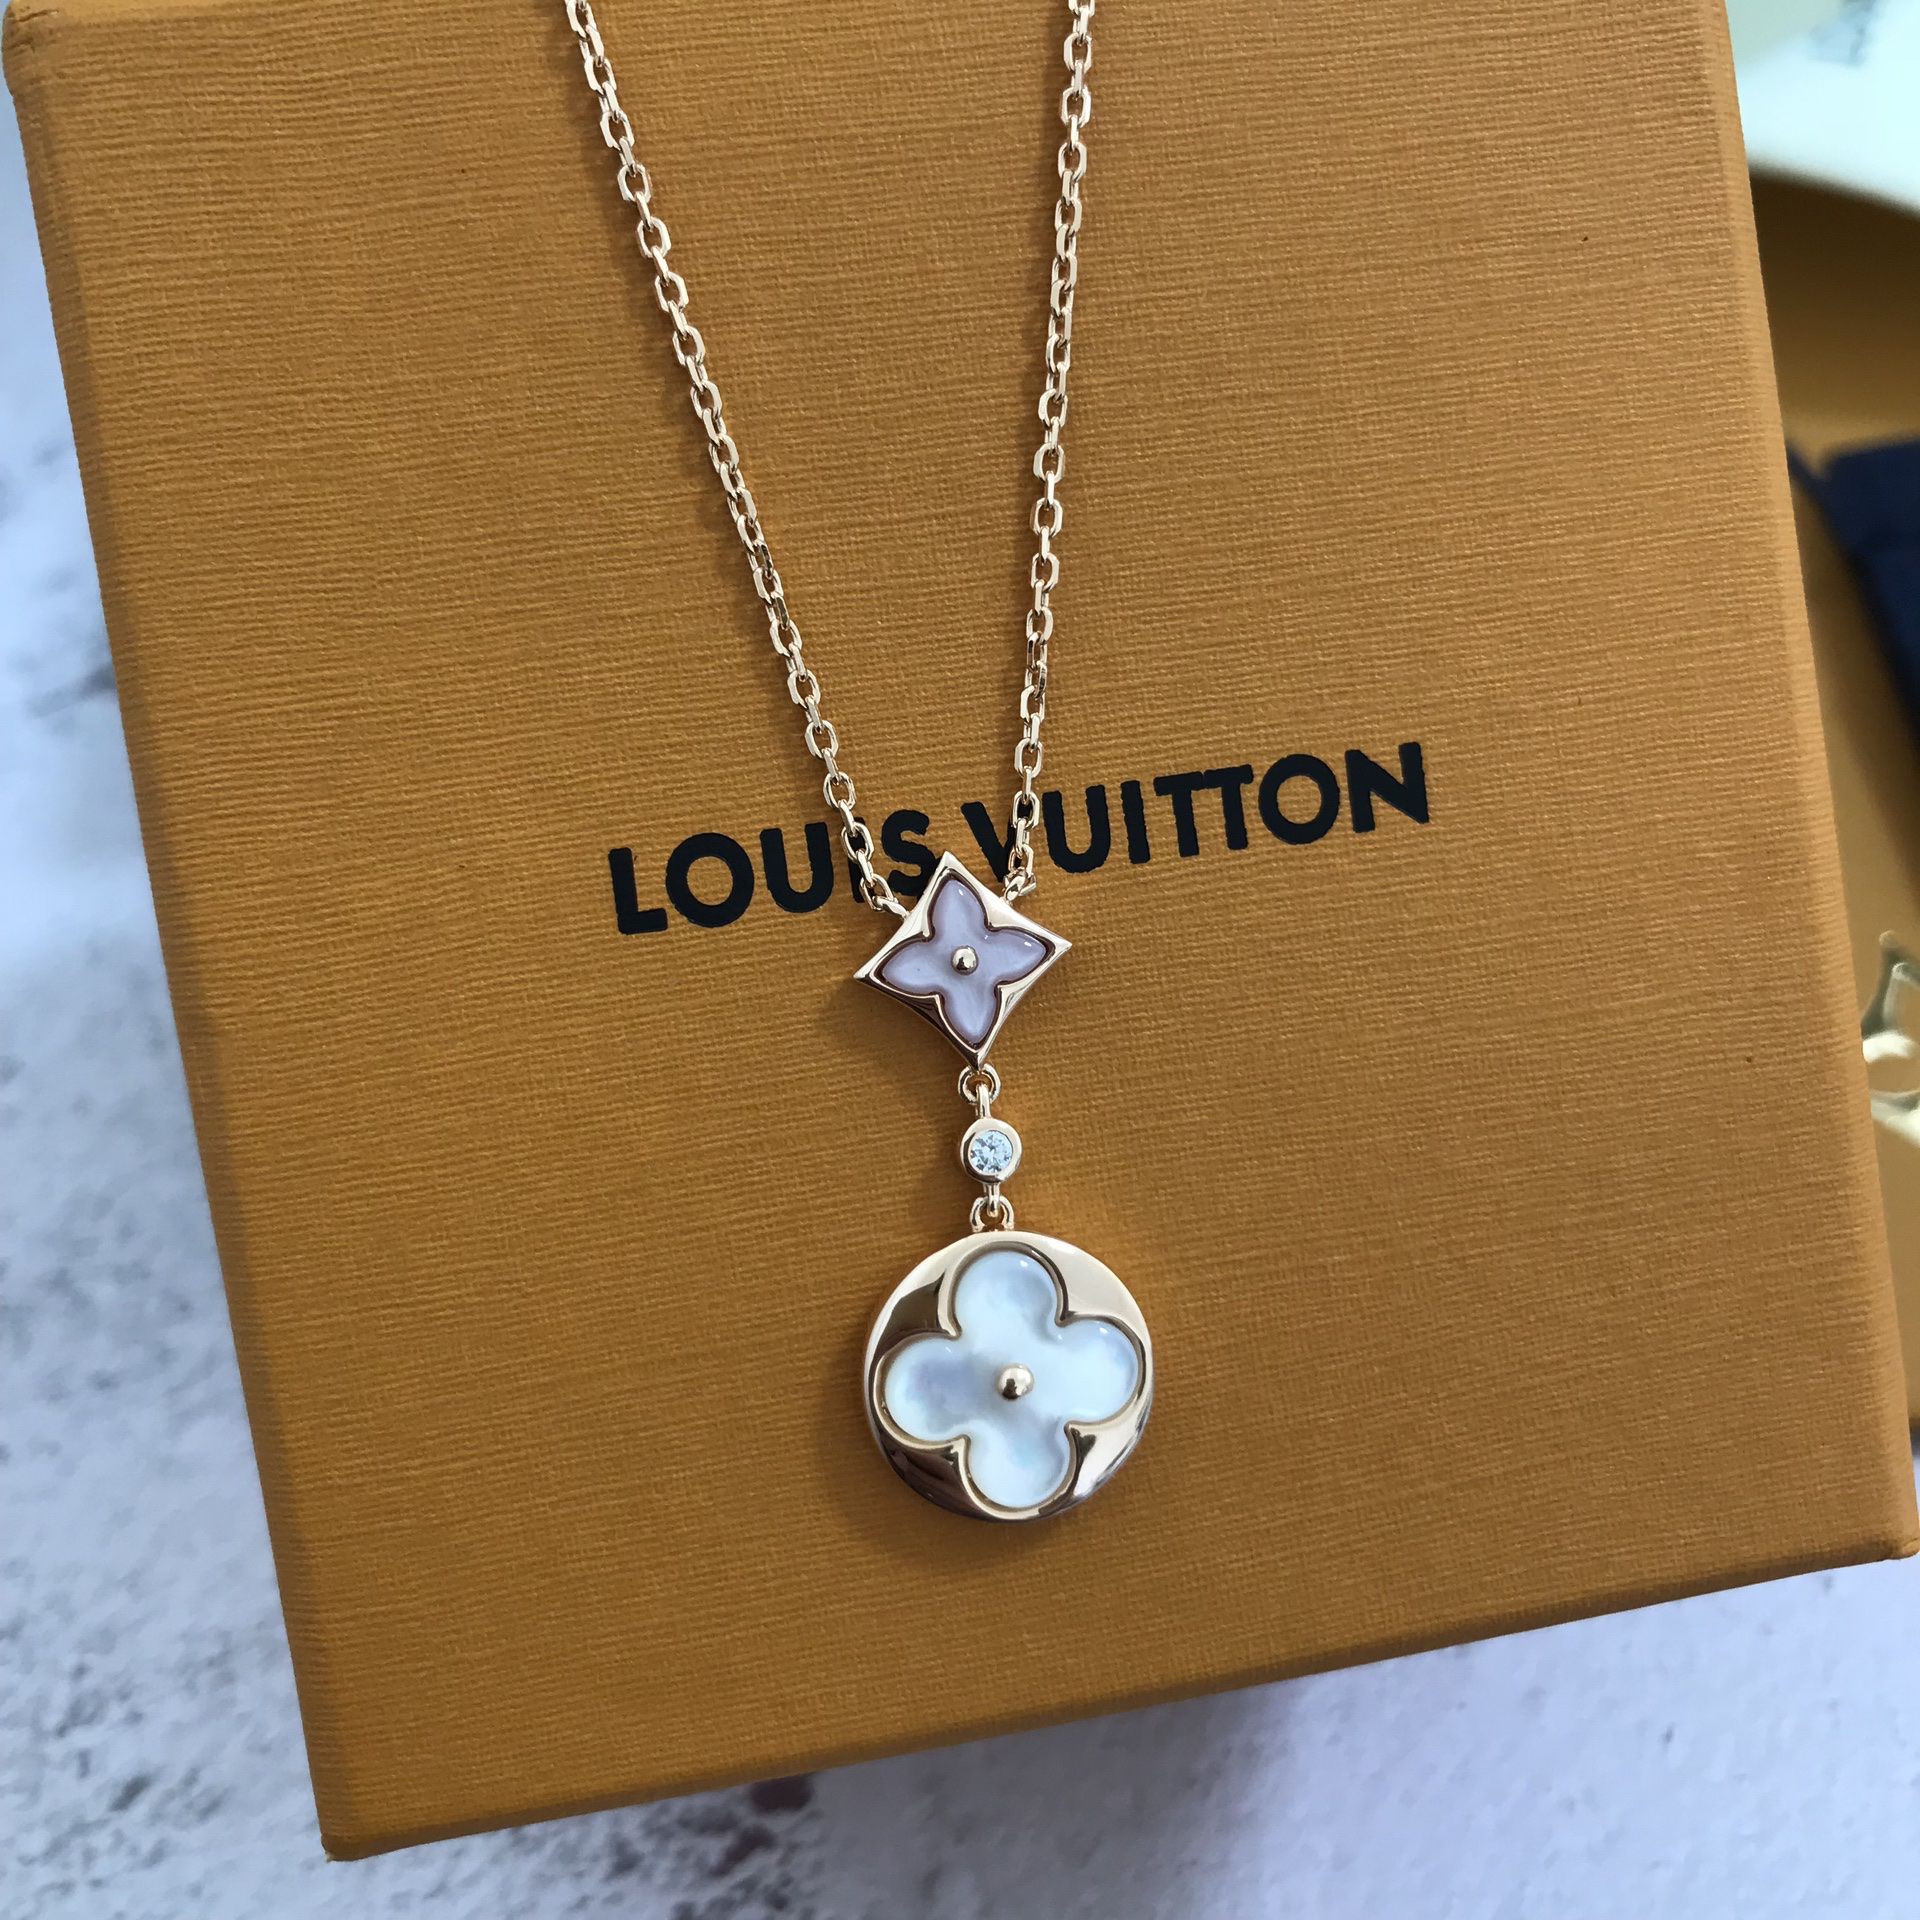 C. 1980 Vintage Louis Vuitton 18kt Rose Gold Heart Necklace with